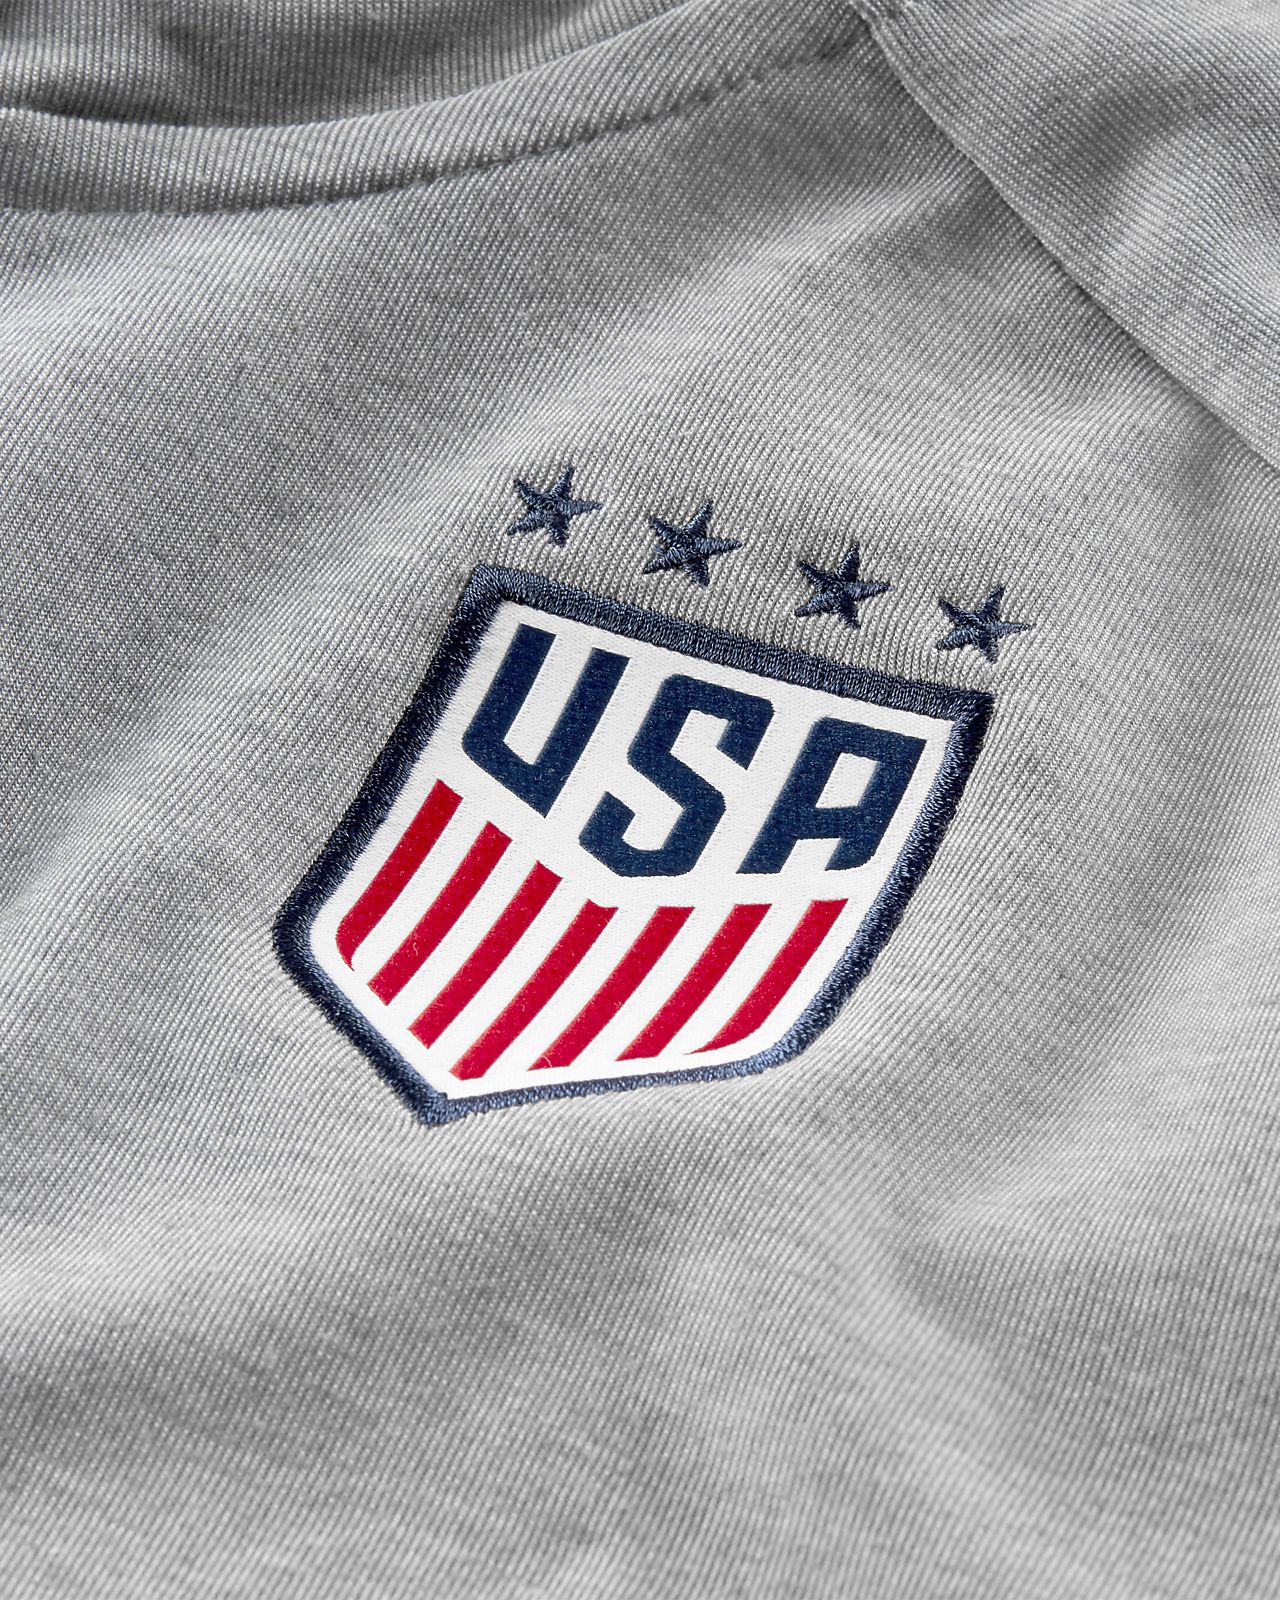 us women's soccer sweatshirt